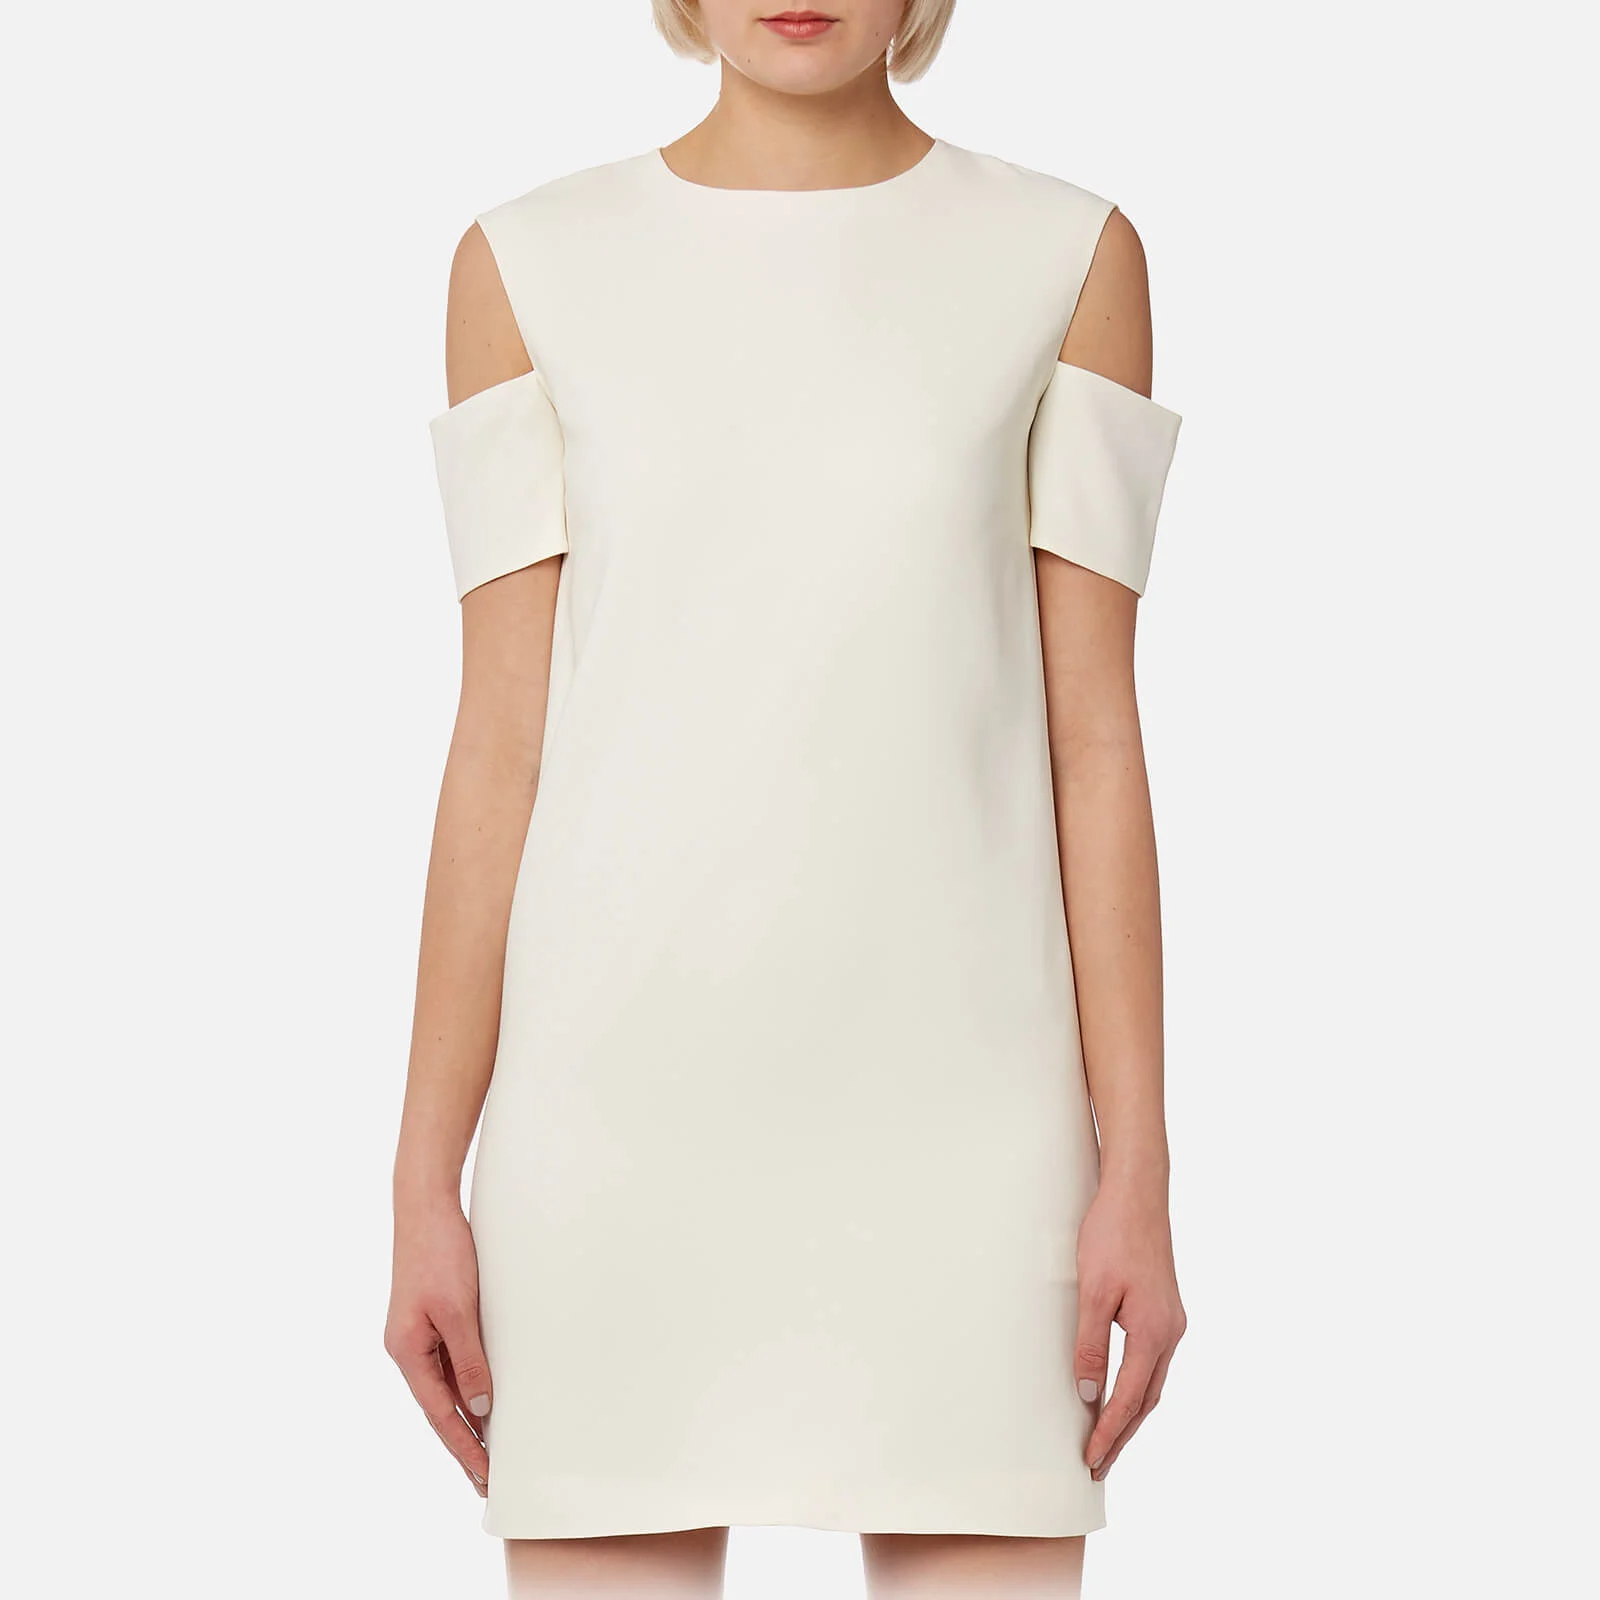 Helmut Lang Women's Arm Cuff Dress - Ivory Image 1